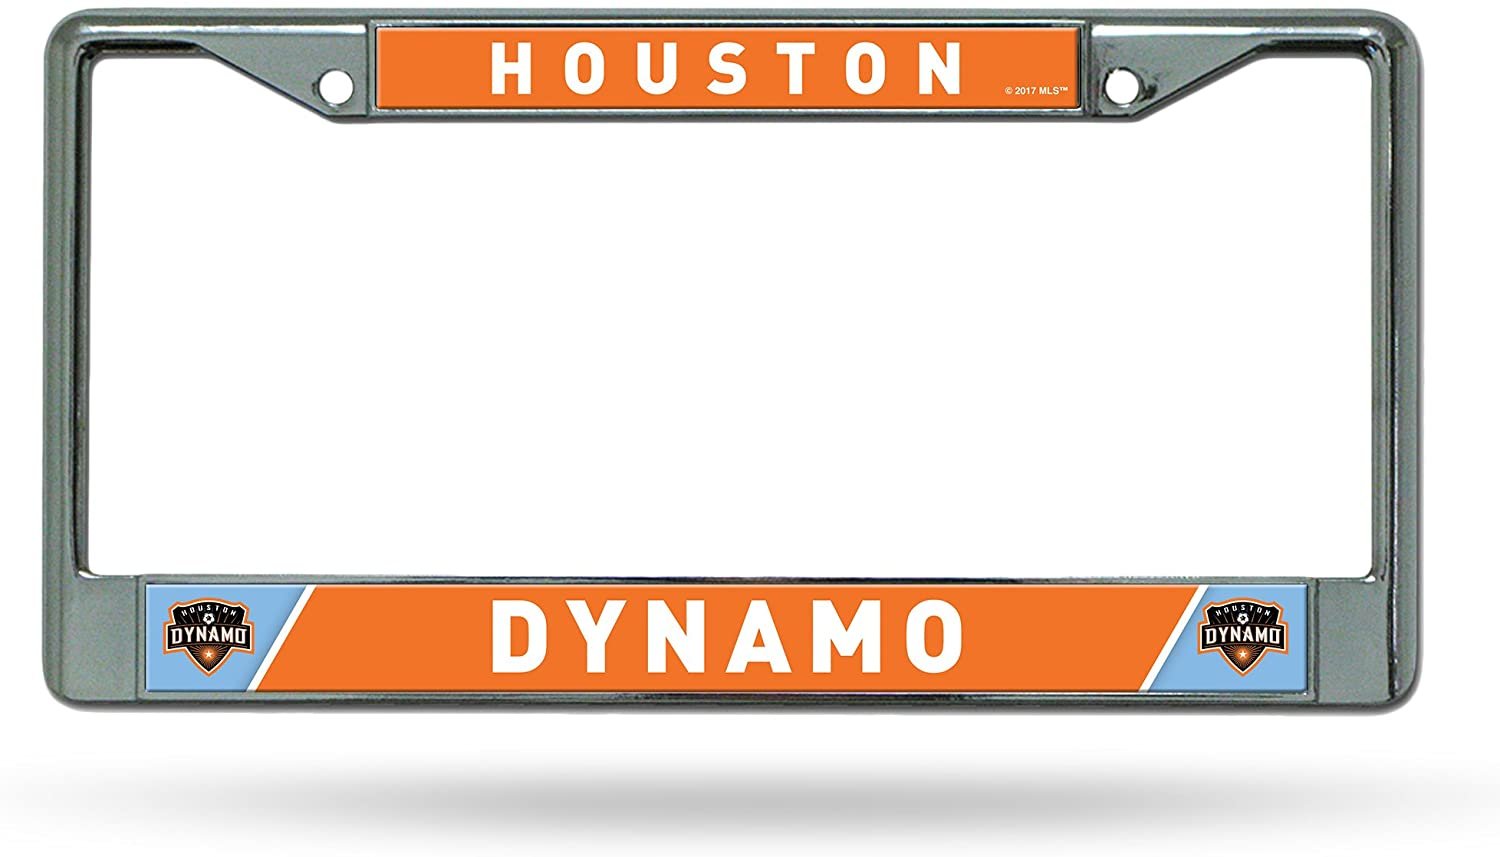 Houston Dynamo MLS Premium Metal License License Plate Frame Chrome Tag Cover, 12x6 Inch